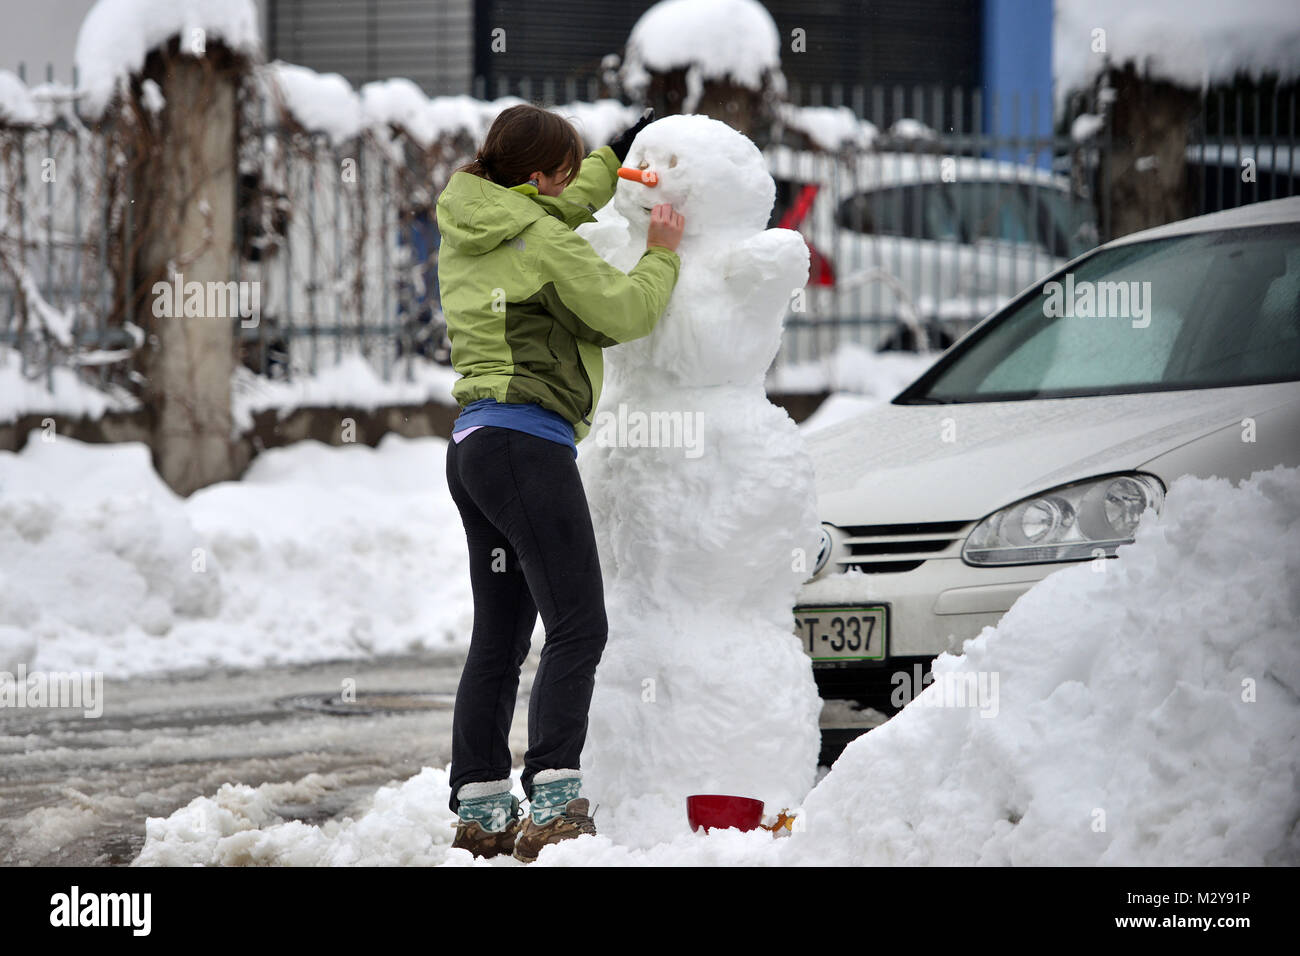 Lubljana, Slovenia on FEBRUARY 7., 2018. Snowy scene in Ljubljana, the capital of Slovenia after snow storm. Stock Photo